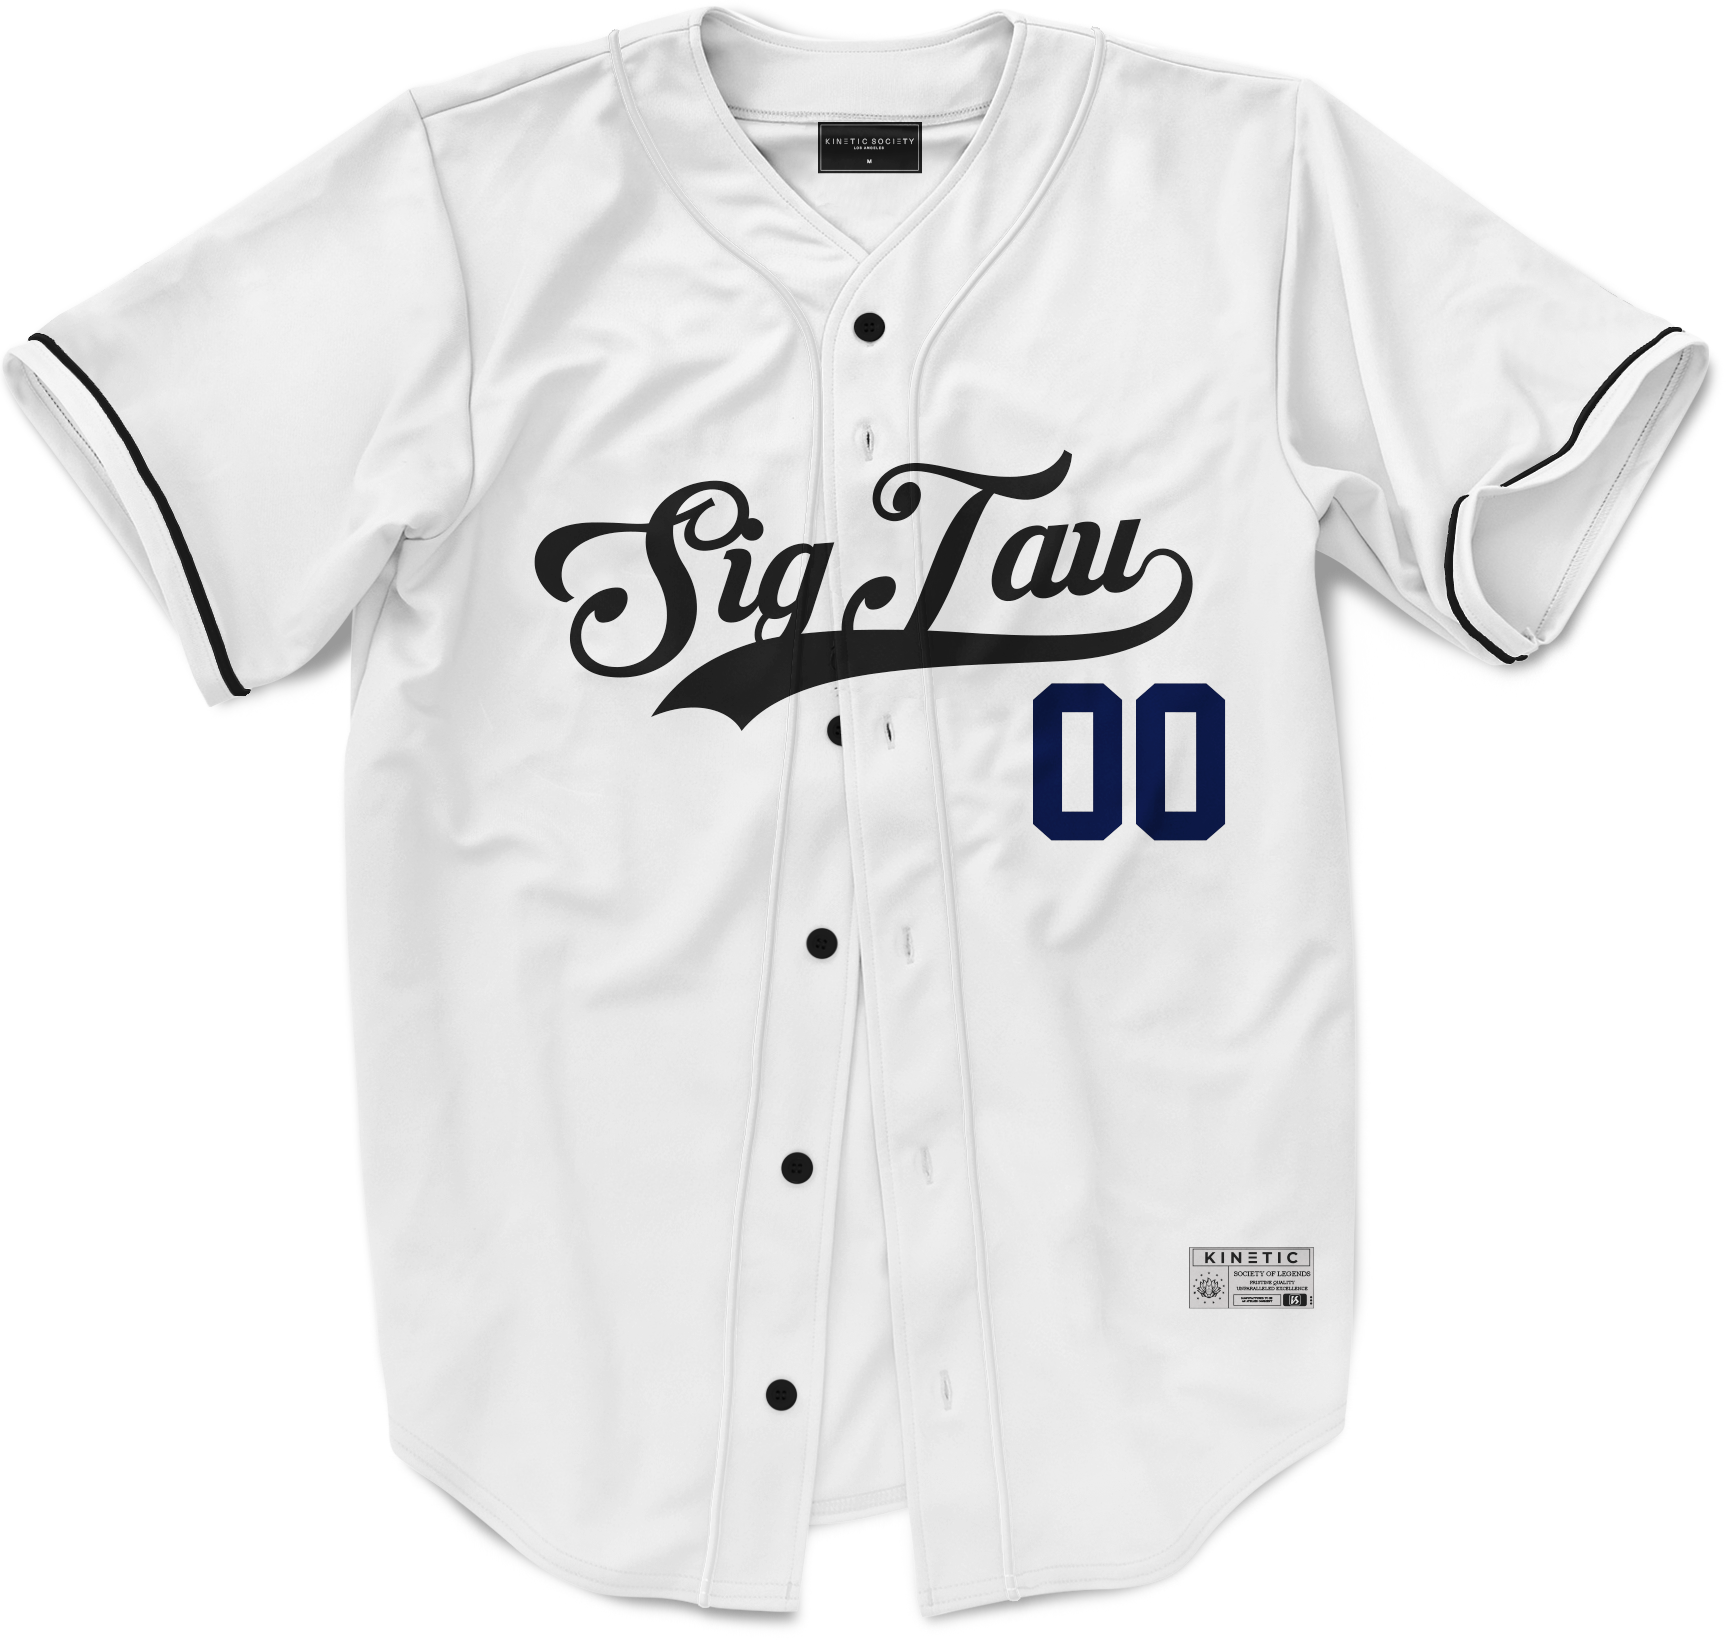 Sigma Tau Gamma - Classic Ballpark Blue Baseball Jersey